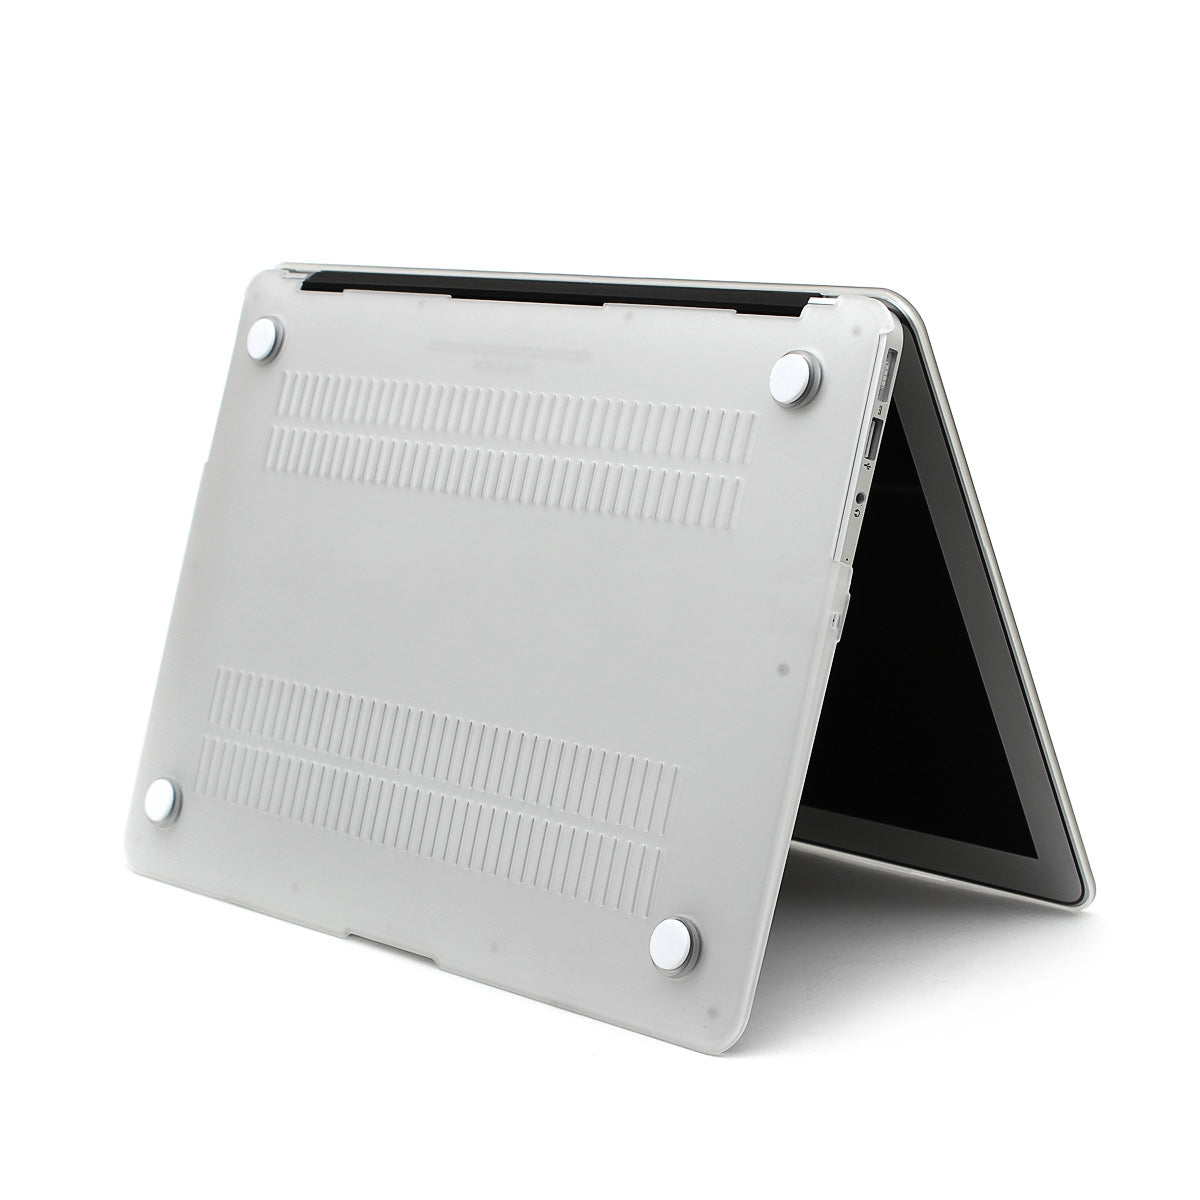 MacBook 保護套 - 360 白色大理石紋